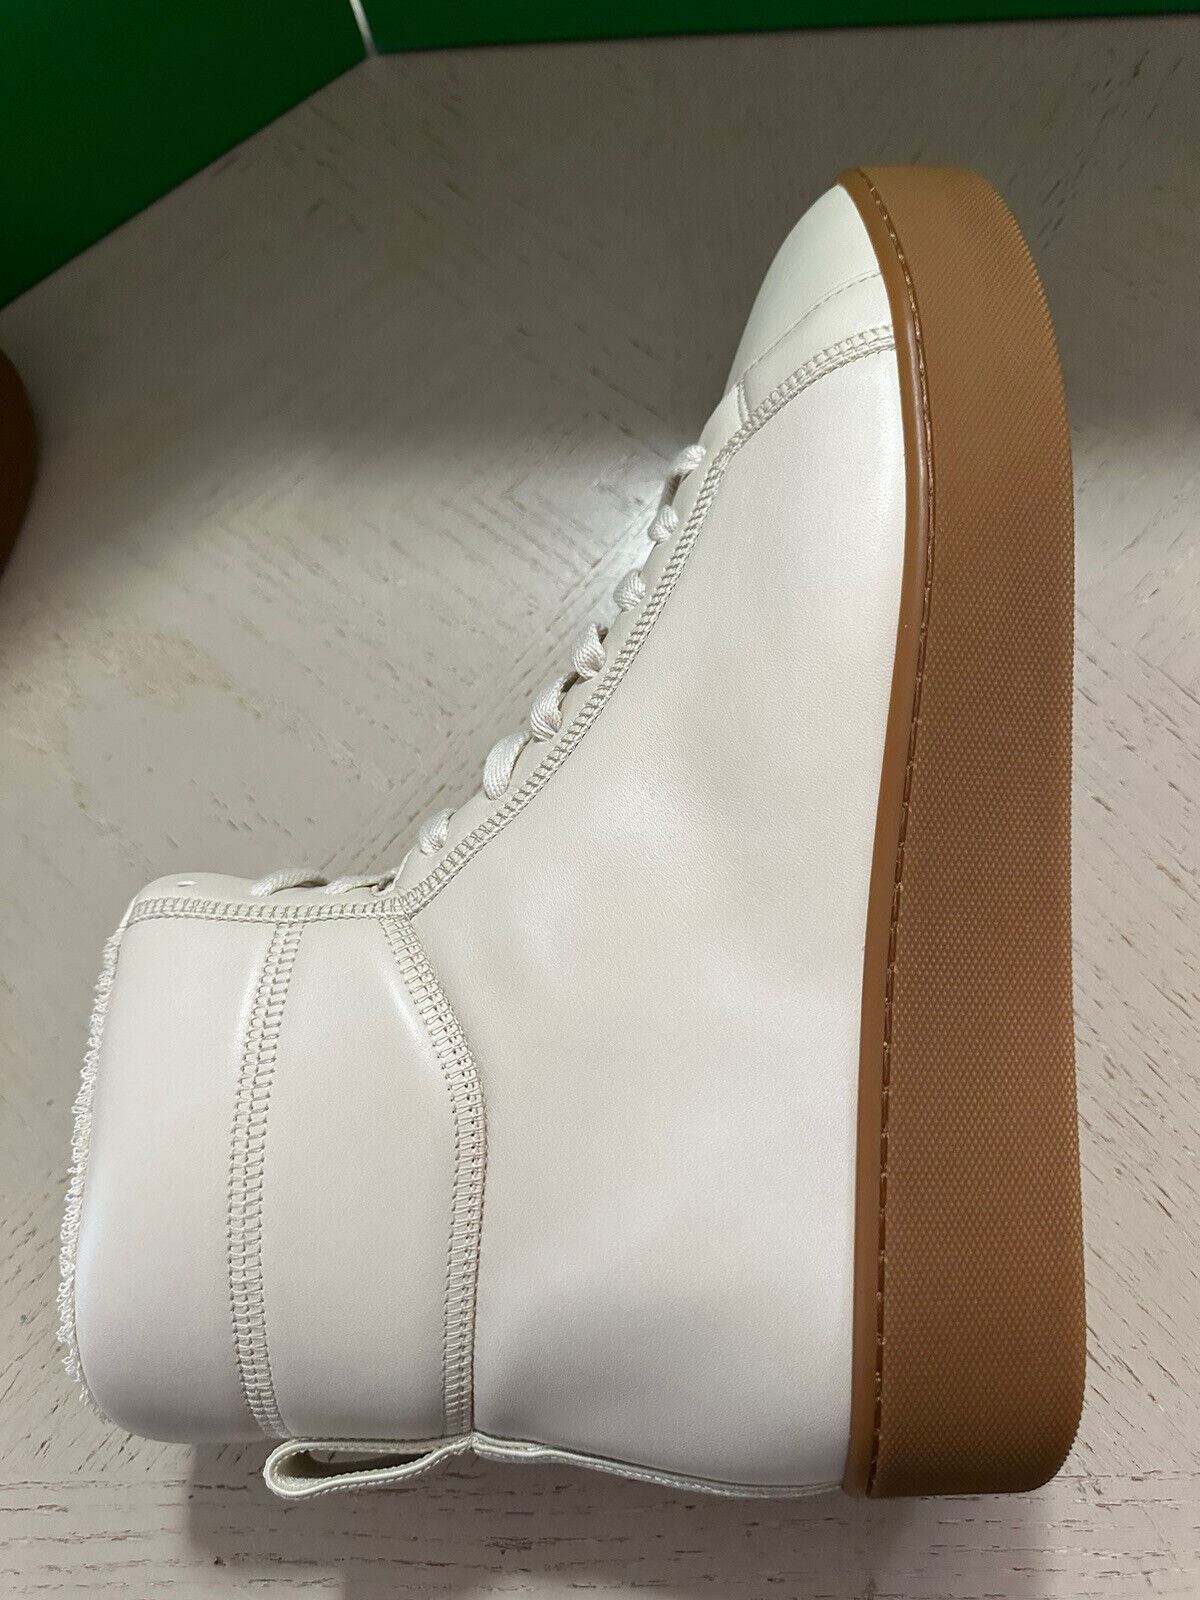 NIB $950 Bottega Veneta Men Leather High Top Sneaker Shoes White 9 US/42 Eu